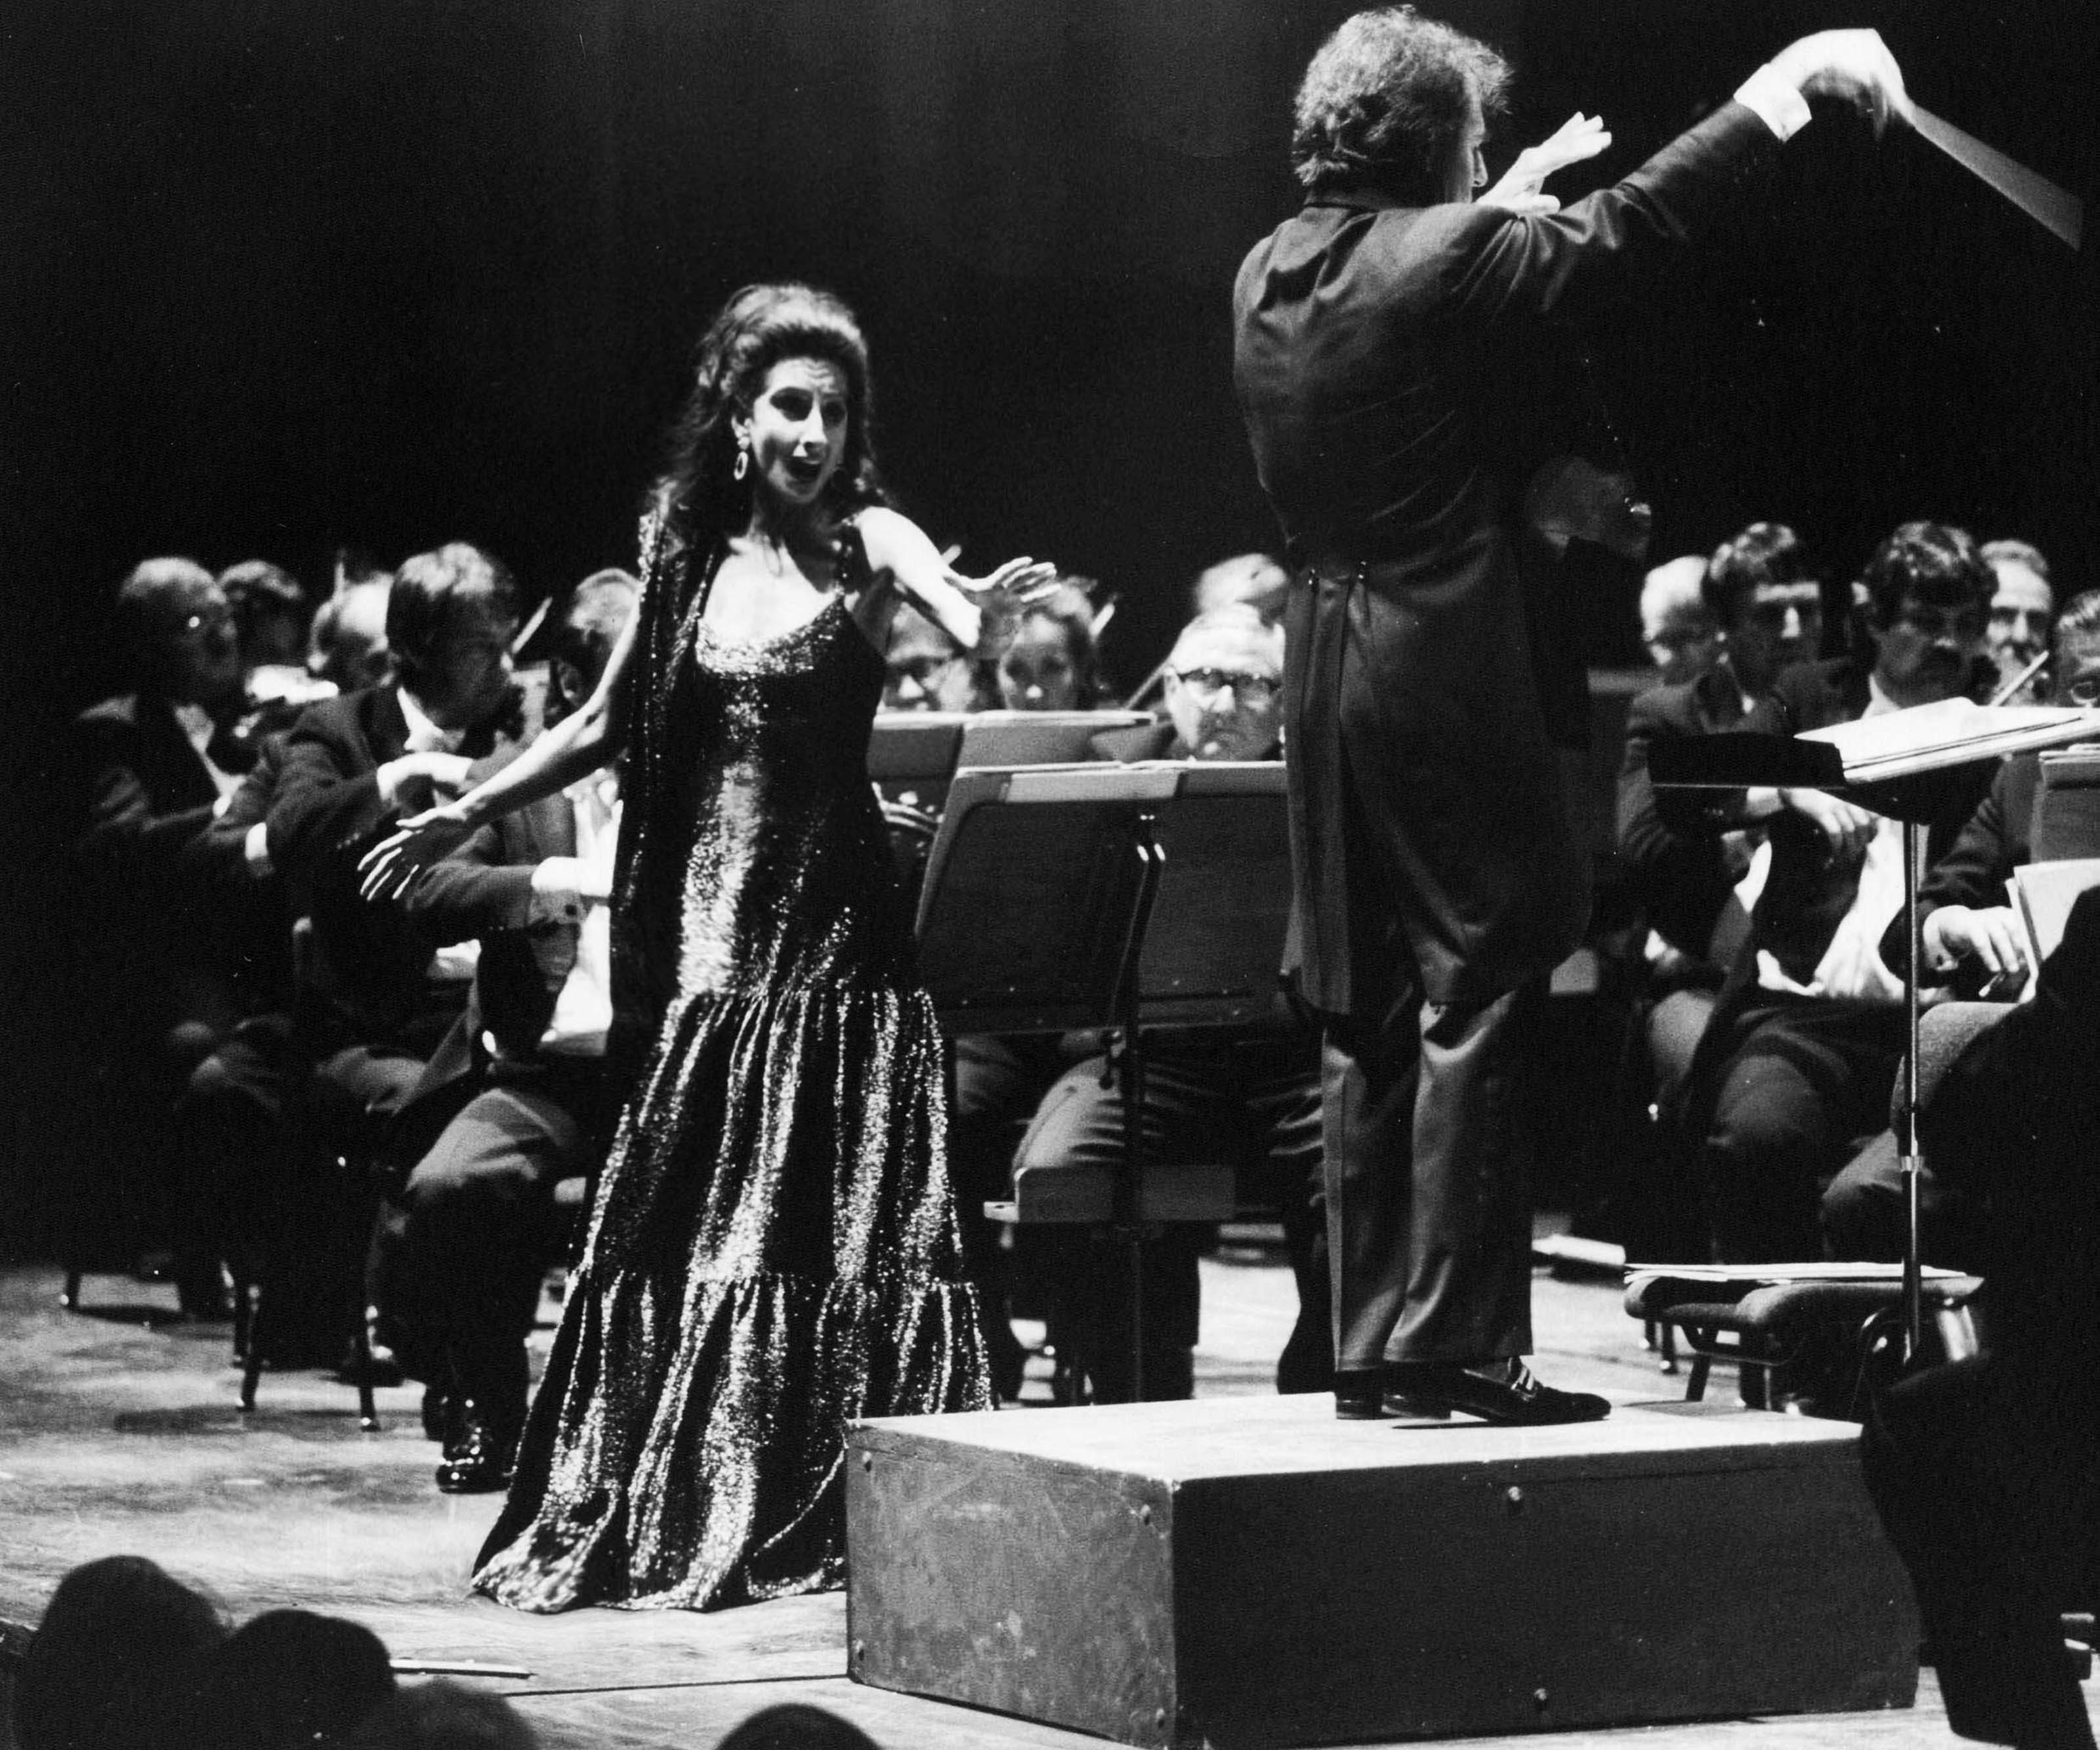 Lucia Aliberti with the conductor Garcia Navarro⚘Deutsche Oper Berlin⚘Gala Concert⚘Berlin⚘On Stage⚘:http://www.luciaaliberti.it #luciaaliberti #deutscheoperberlin #berlin #onstage #concert